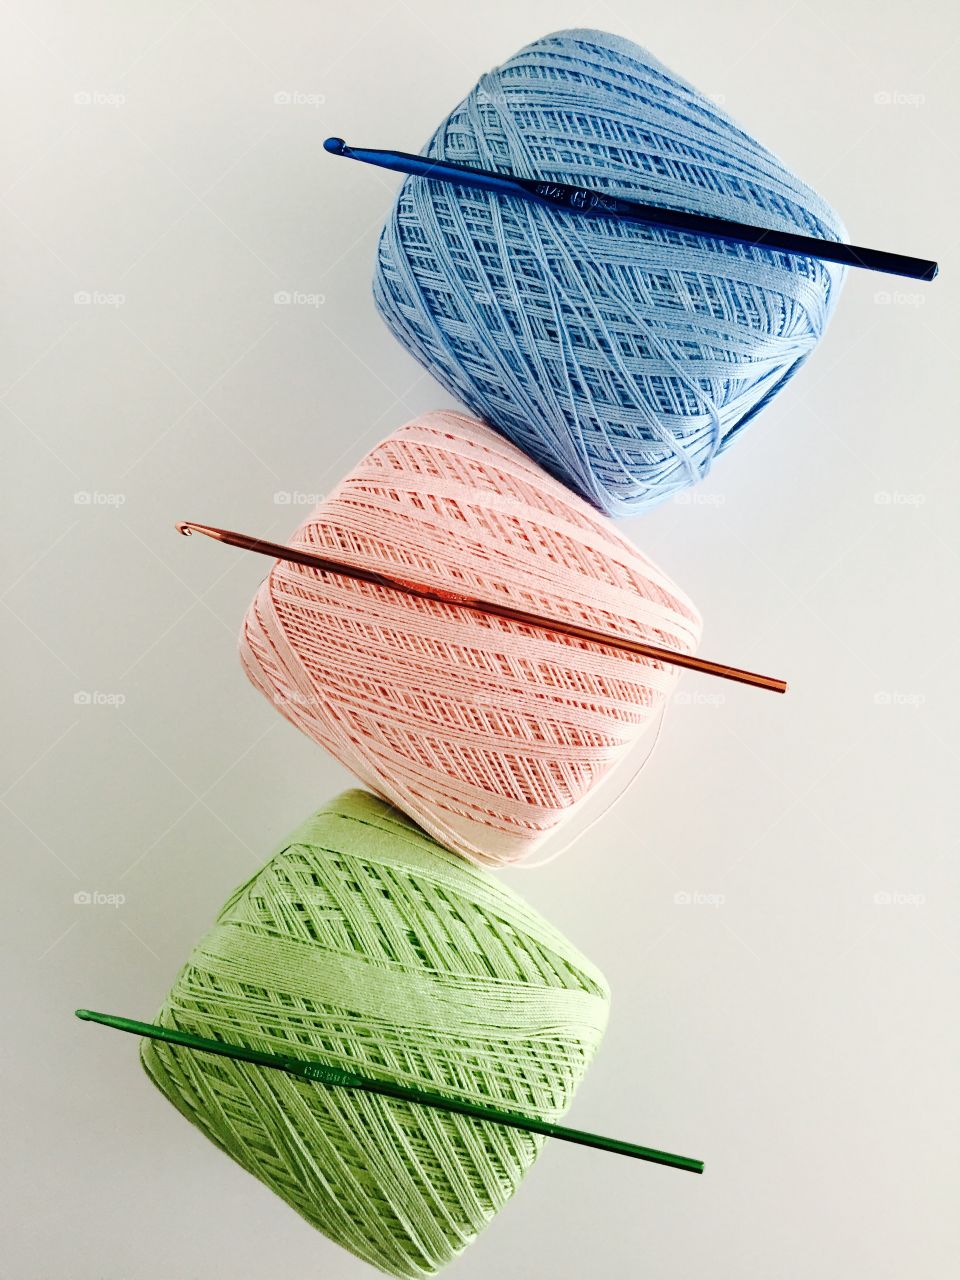 Ball of yarn with knitting needle